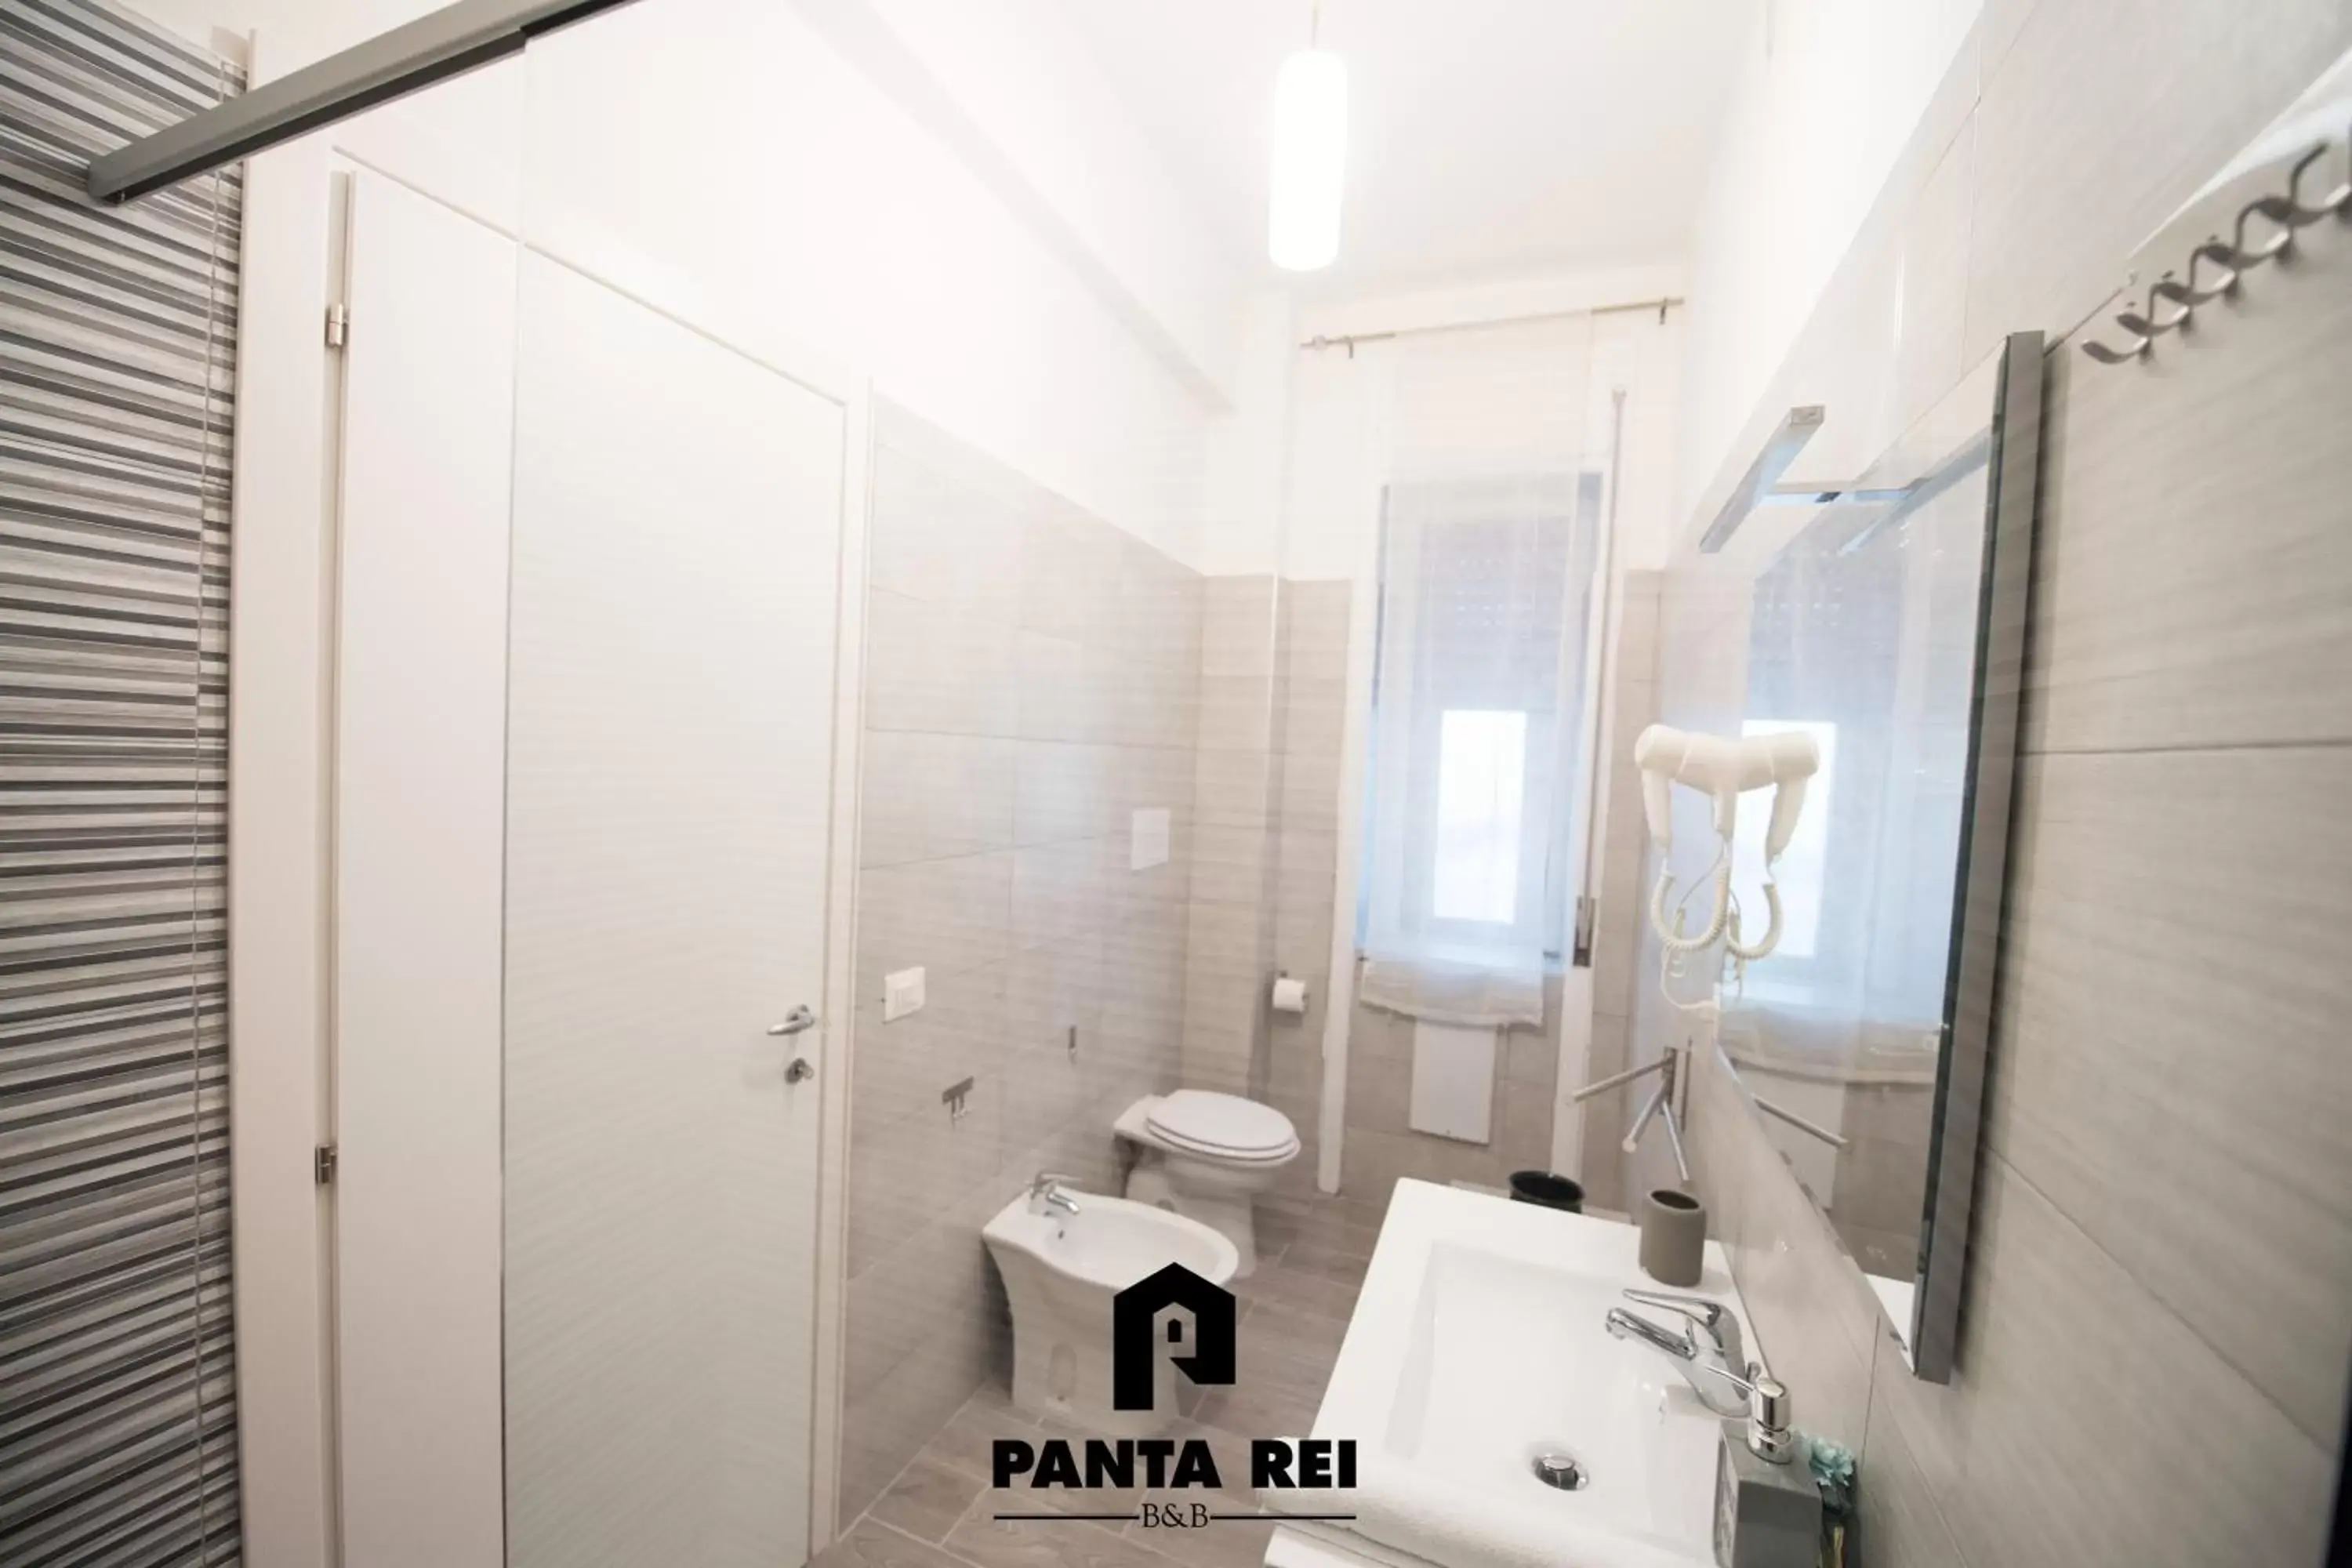 Bathroom in Pantarei B&B